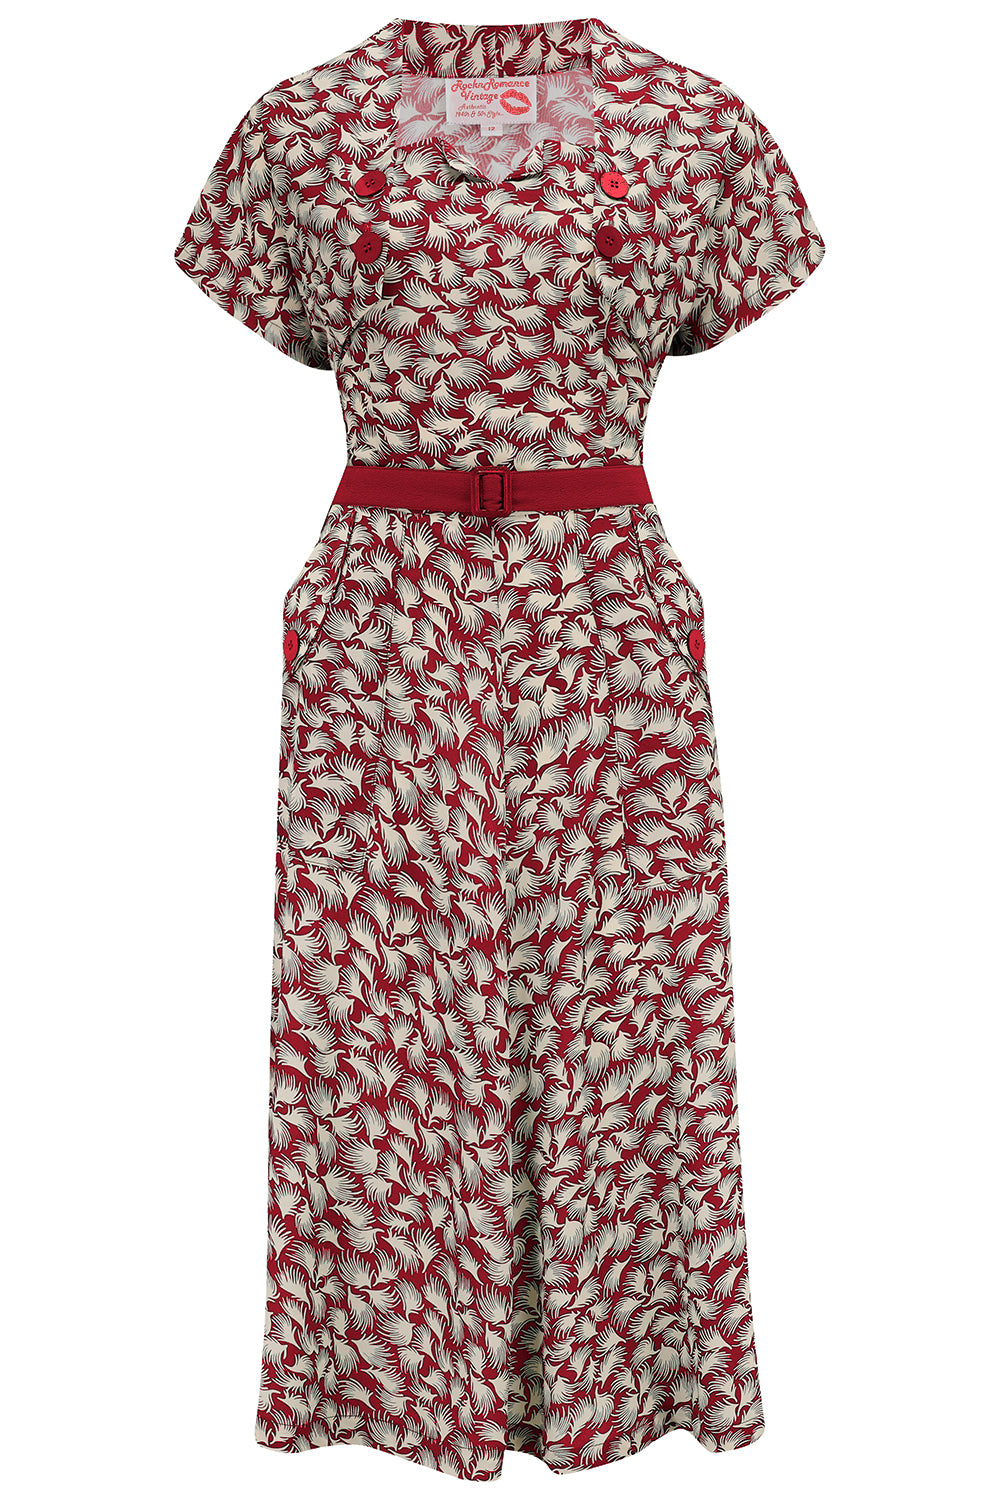 The "Ayda" 2pc Dress & Detachable Shrug Bolero Set In Wine Whisp, True Vintage Style